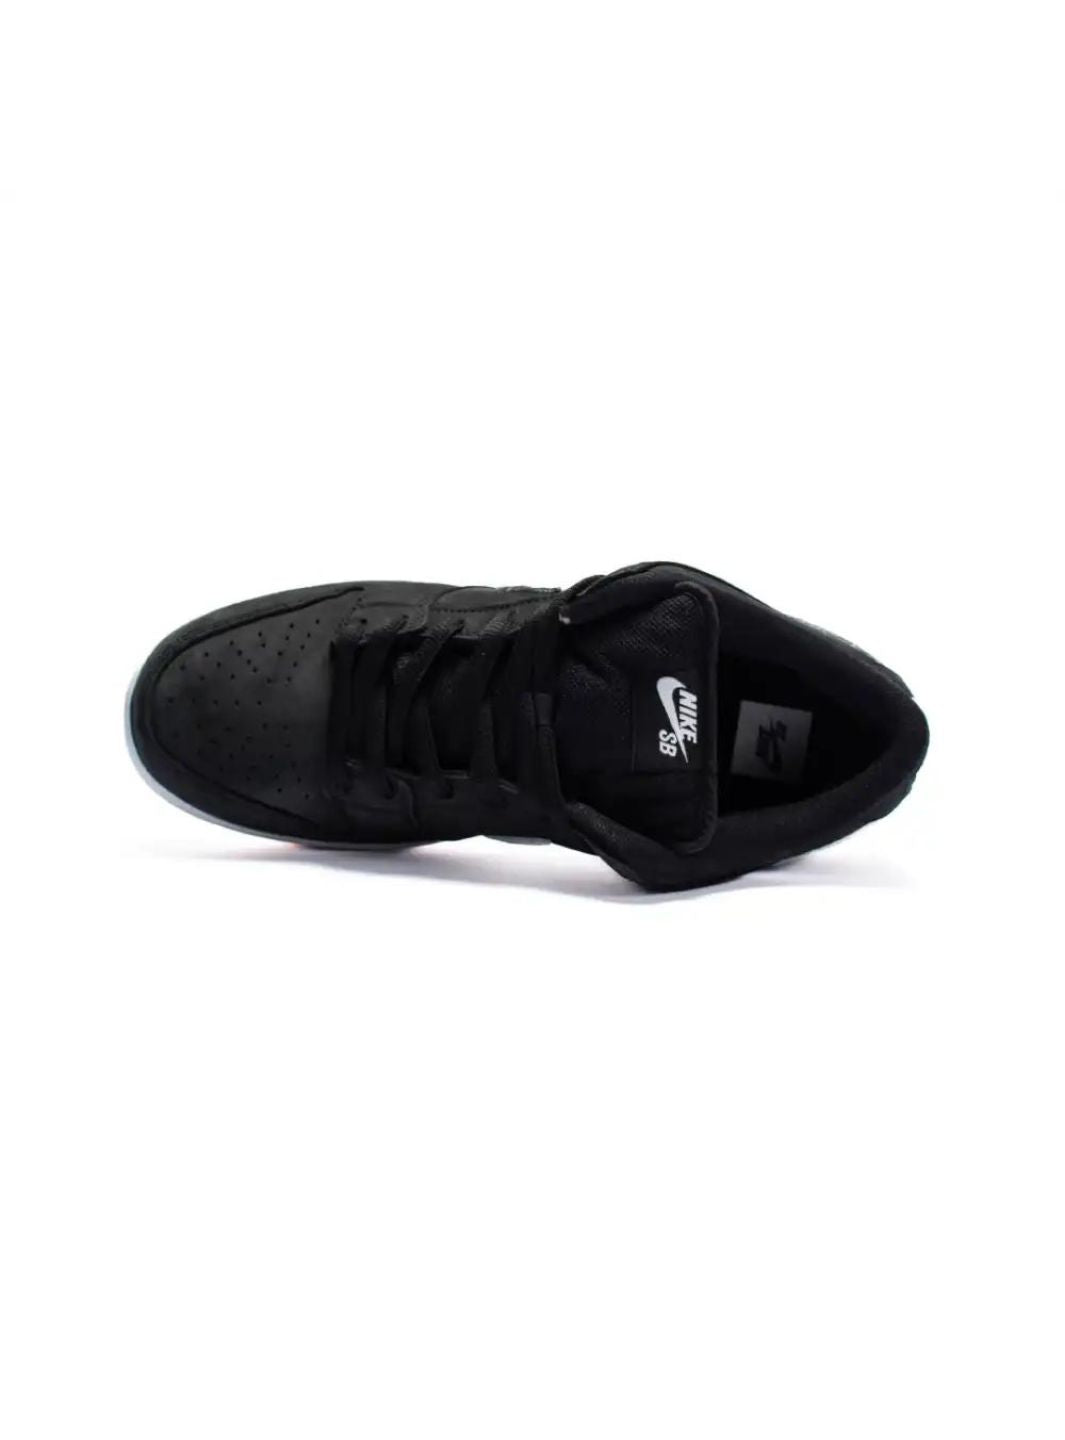 Nike SB Dunk Low Black Gum